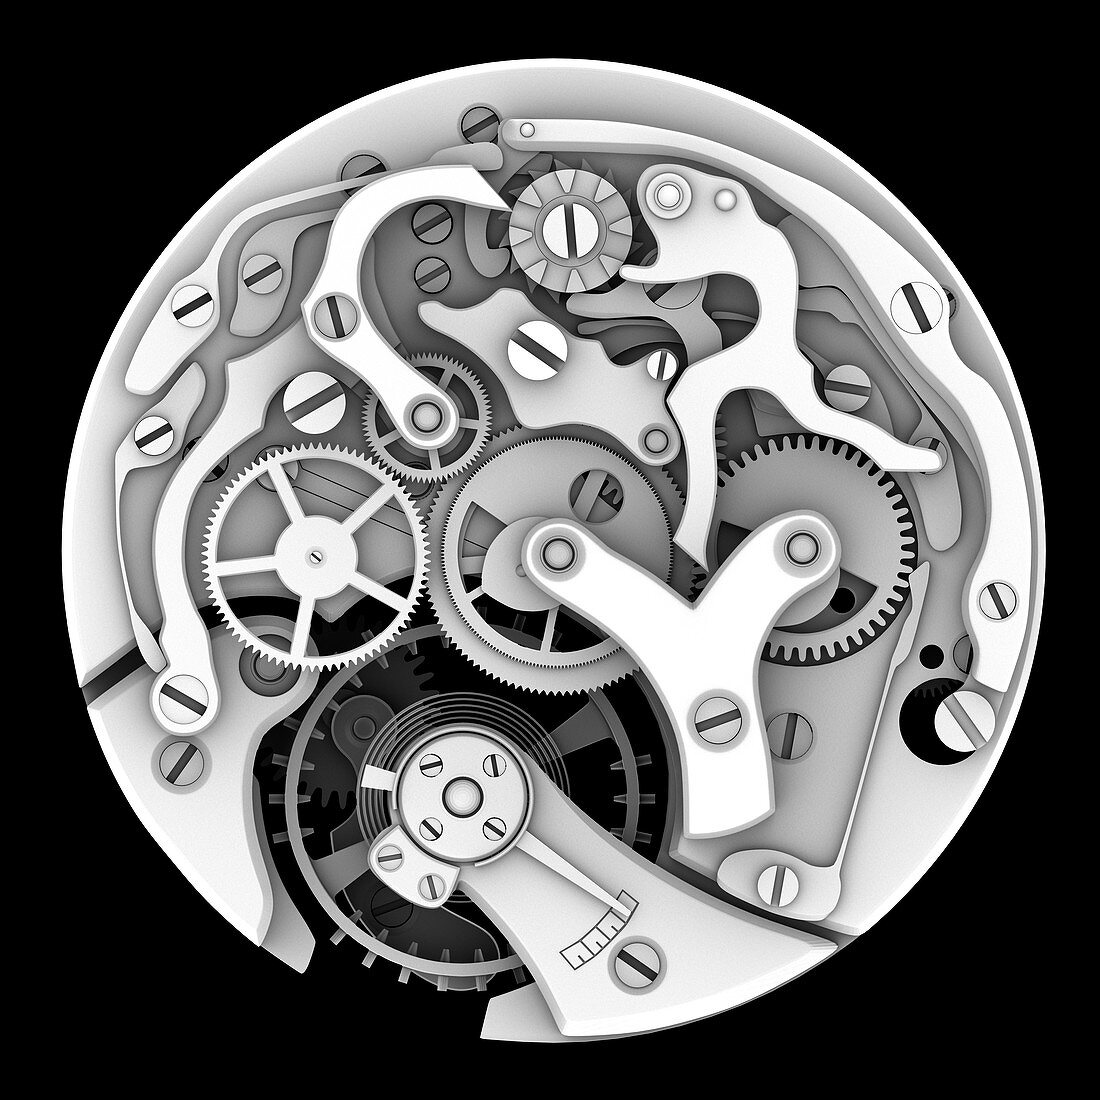 Mechanical watch interior, illustration